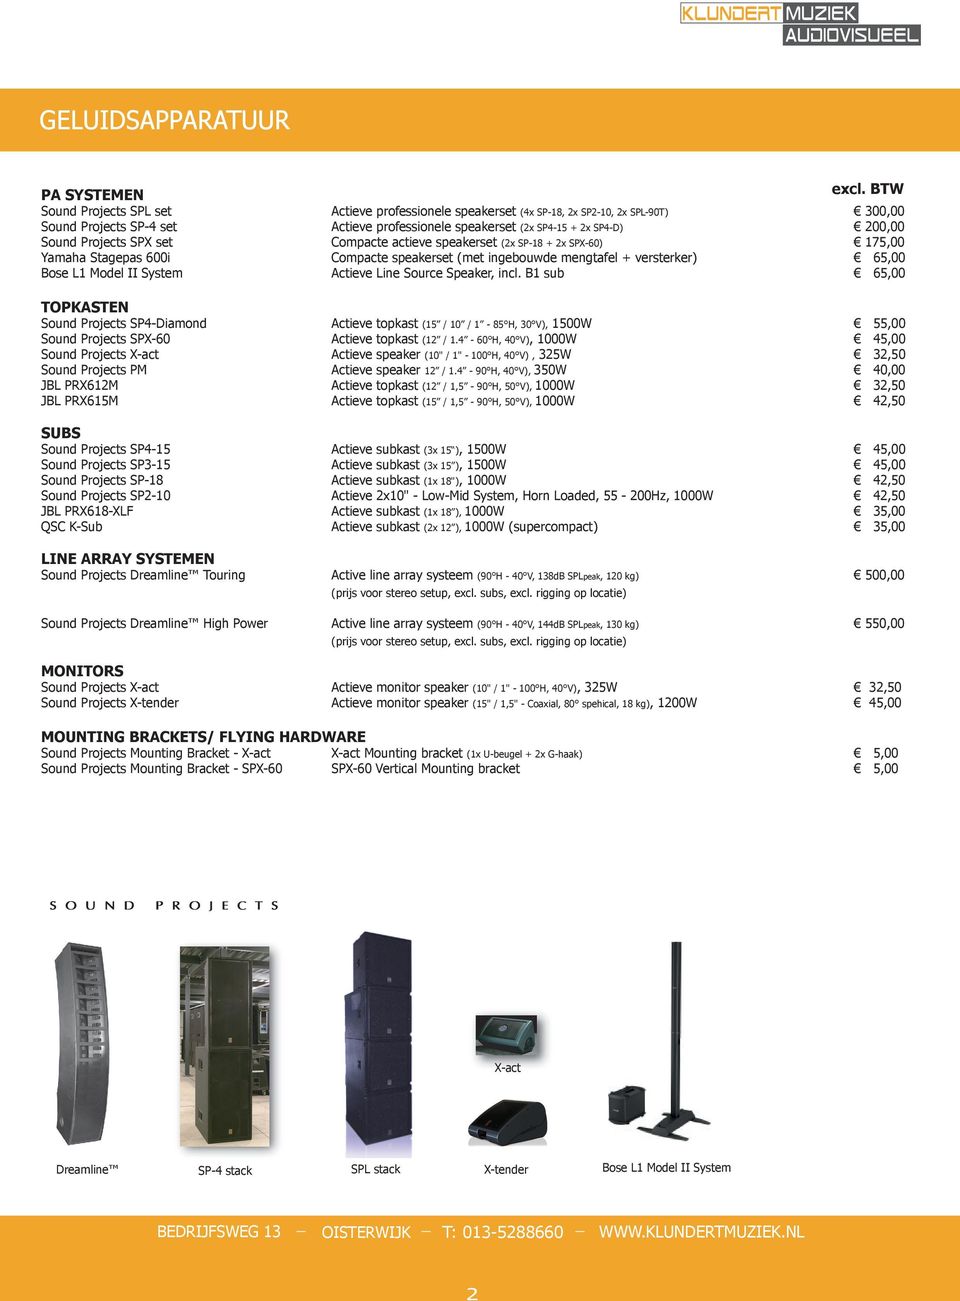 System Actieve Line Source Speaker, incl. B1 sub 65,00 TOPKASTEN Sound Projects SP4-Diamond Actieve topkast (15 / 10 / 1-85 H, 30 V), 1500W 55,00 Sound Projects SPX-60 Actieve topkast (12 / 1.